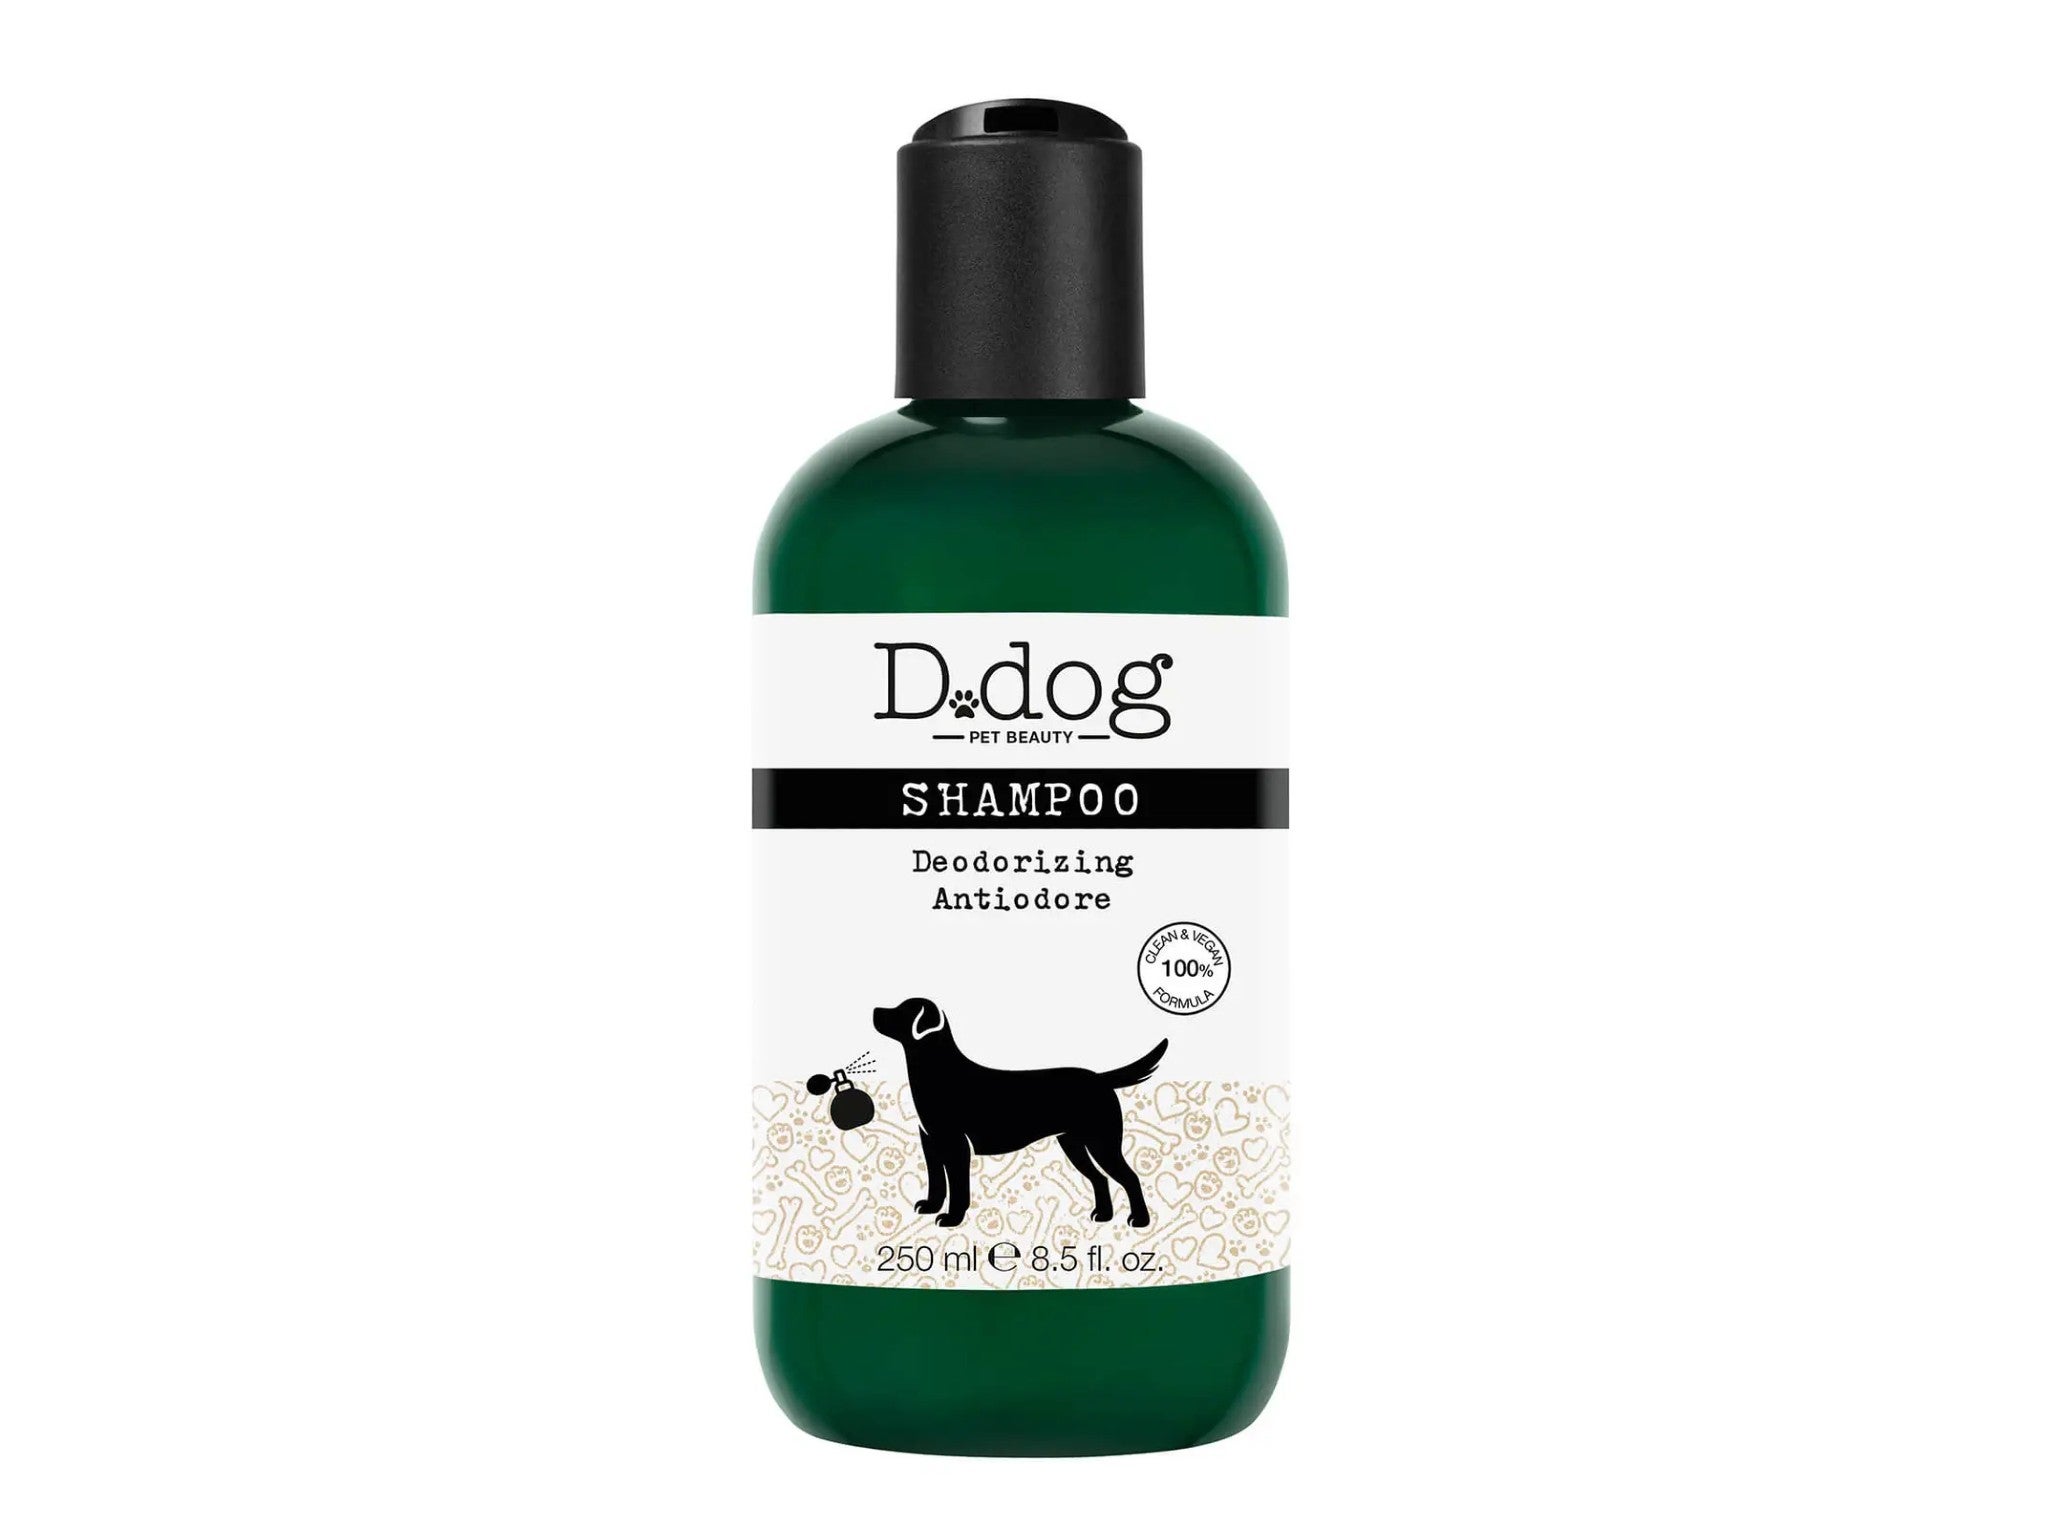 D.Dog deodorising shampoo indybest.jpg